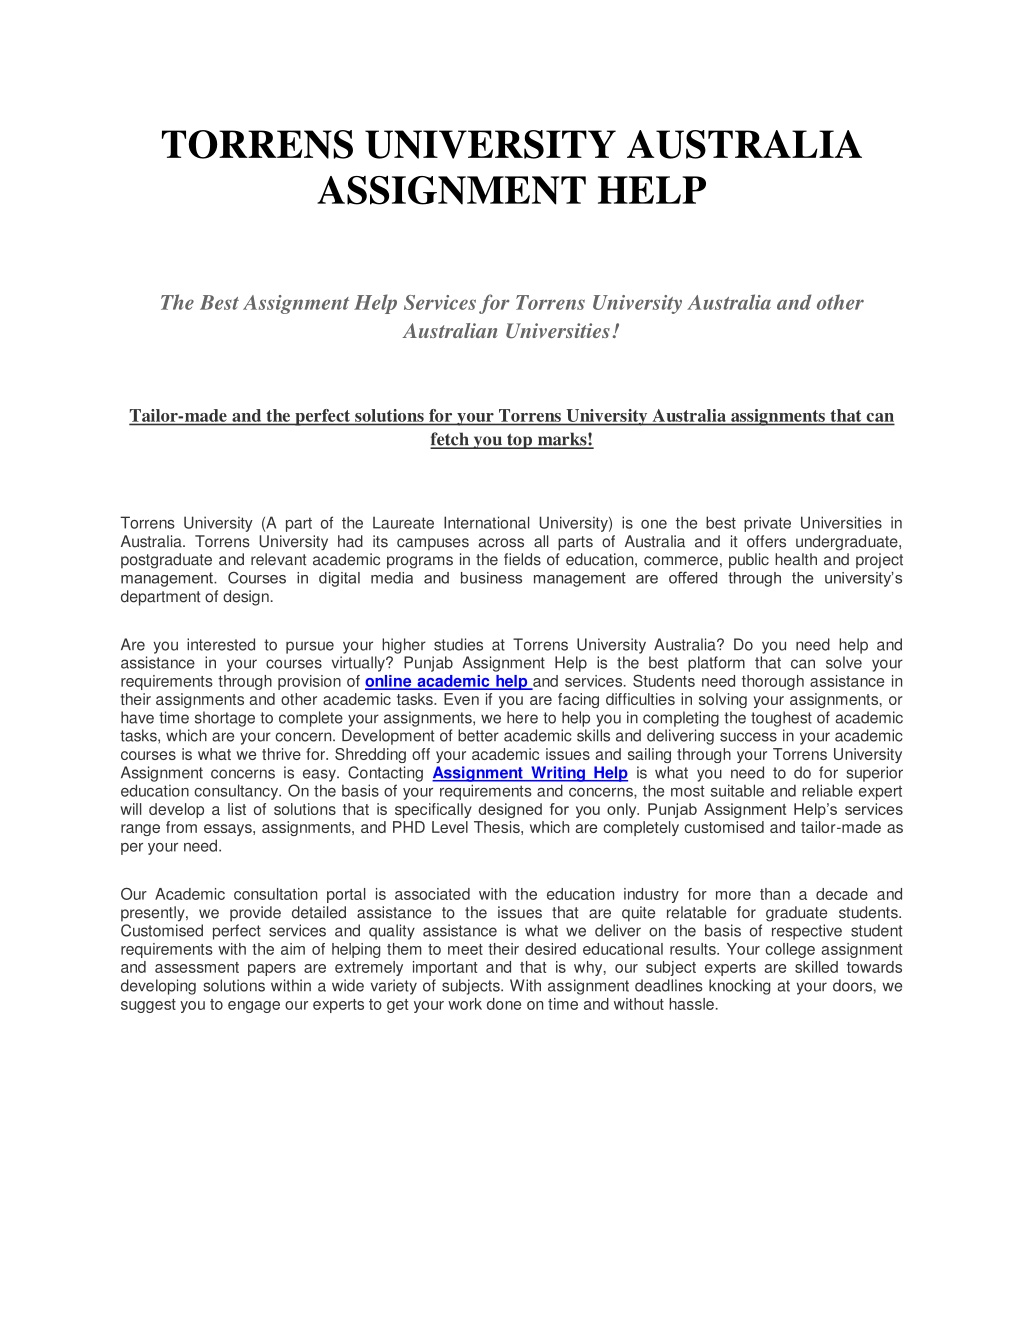 torrens university assignment cover sheet